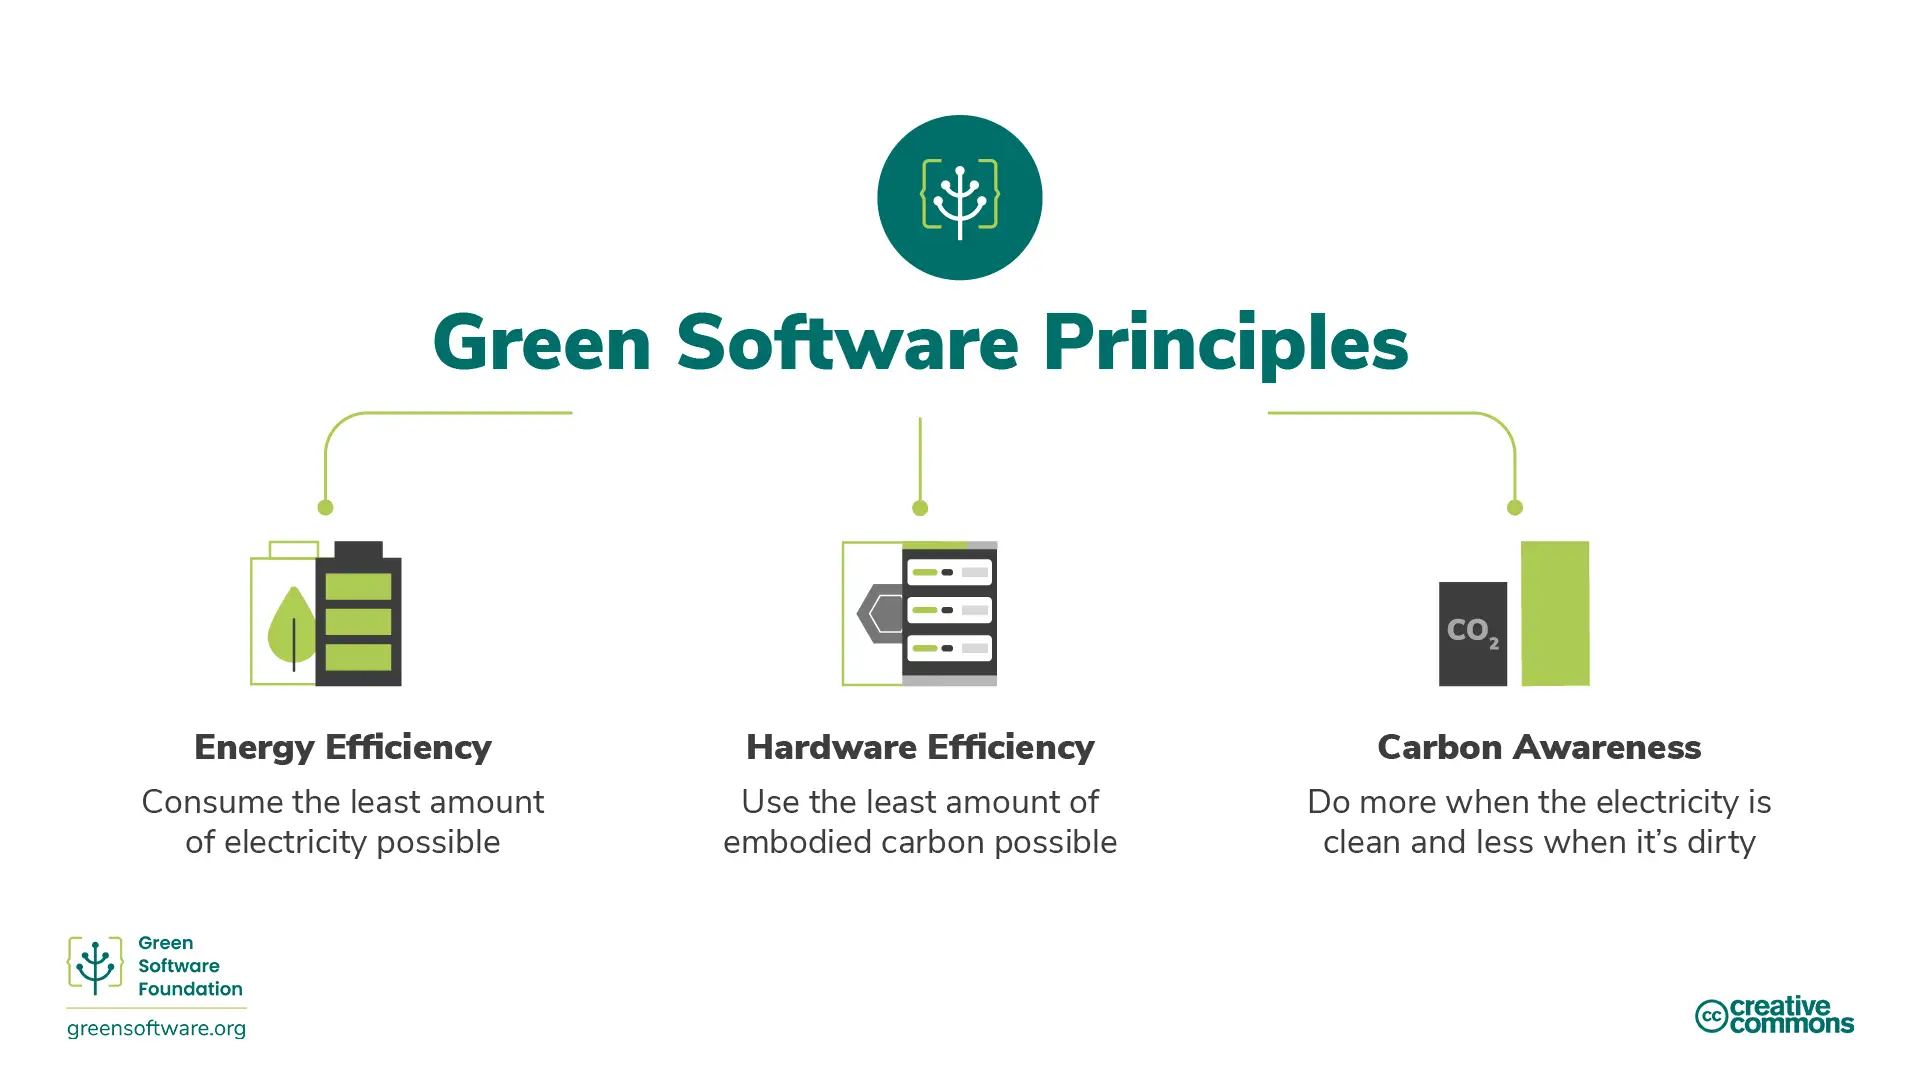 Green Software Foundation - Energy Principles